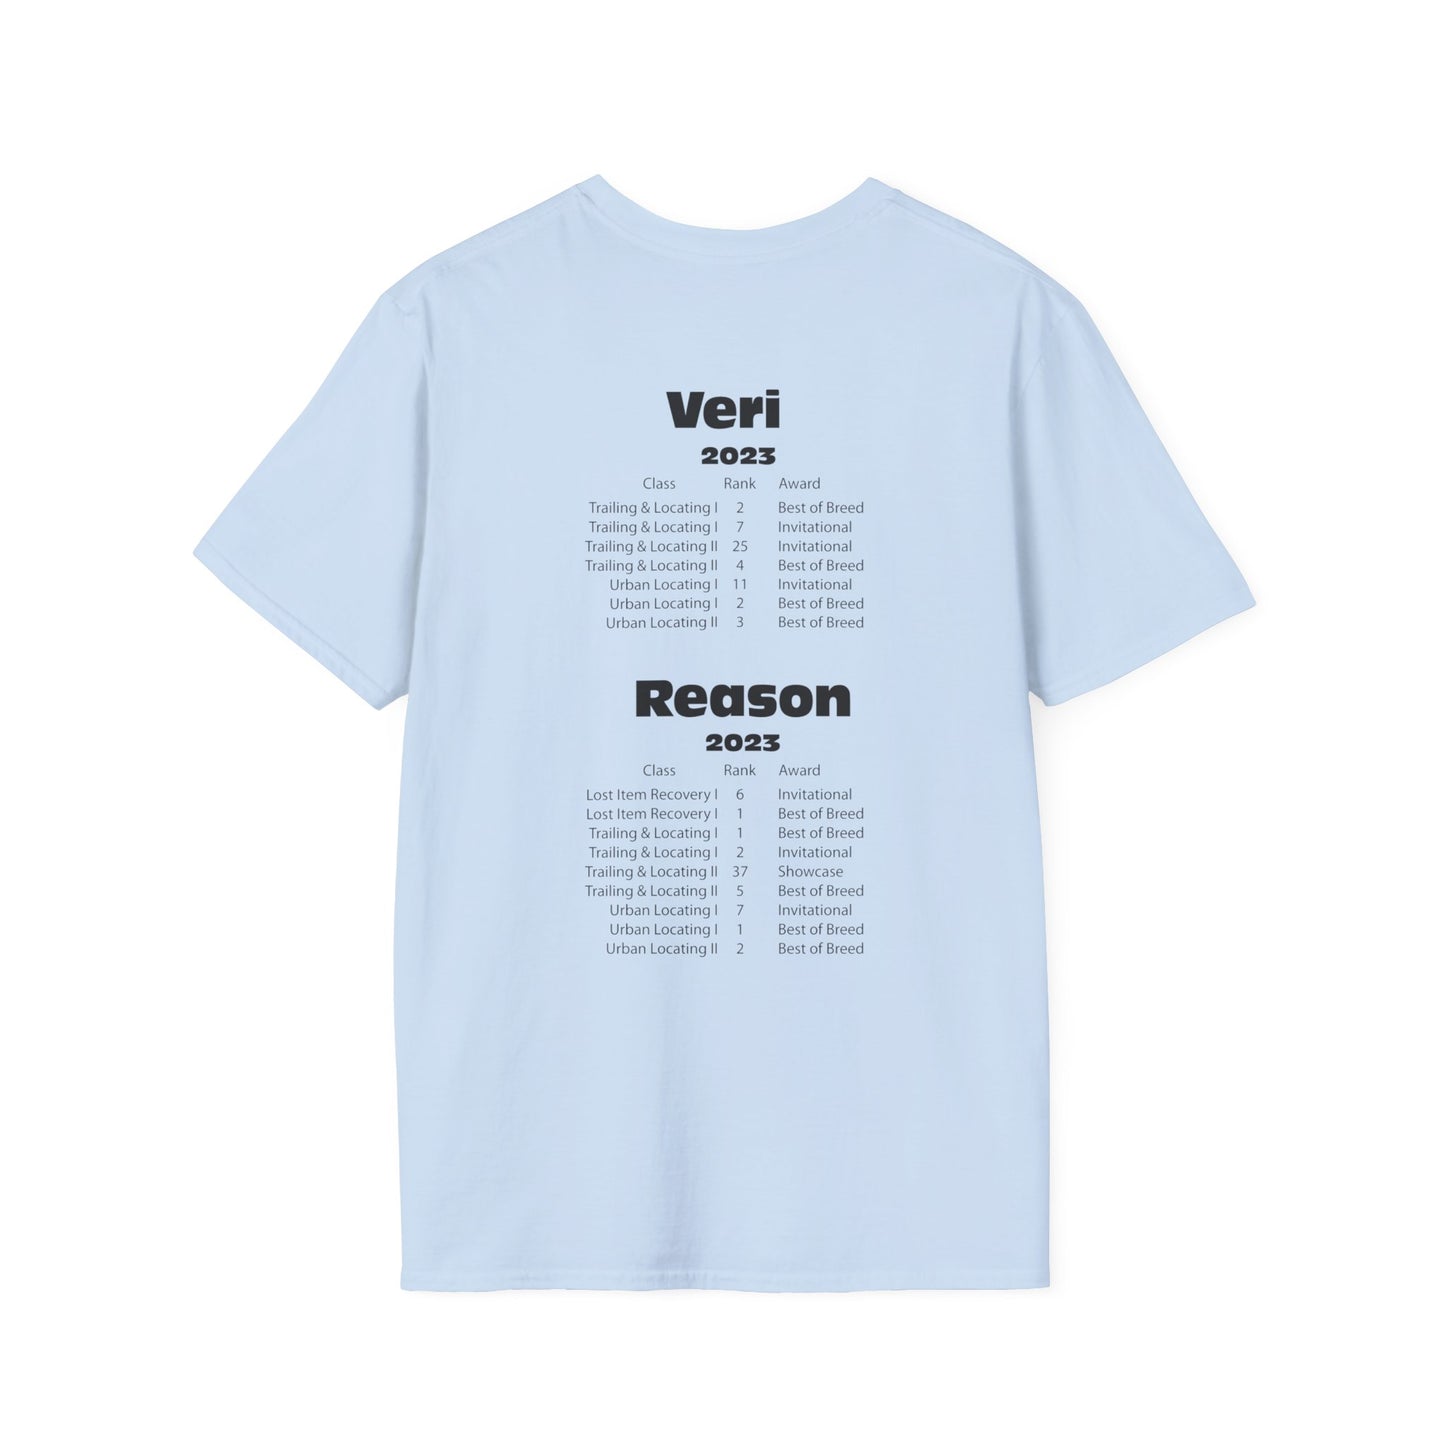 REASON/VERI  TEAM BORDER TERRIER.2 - NASDA  Unisex Softstyle T-Shirt